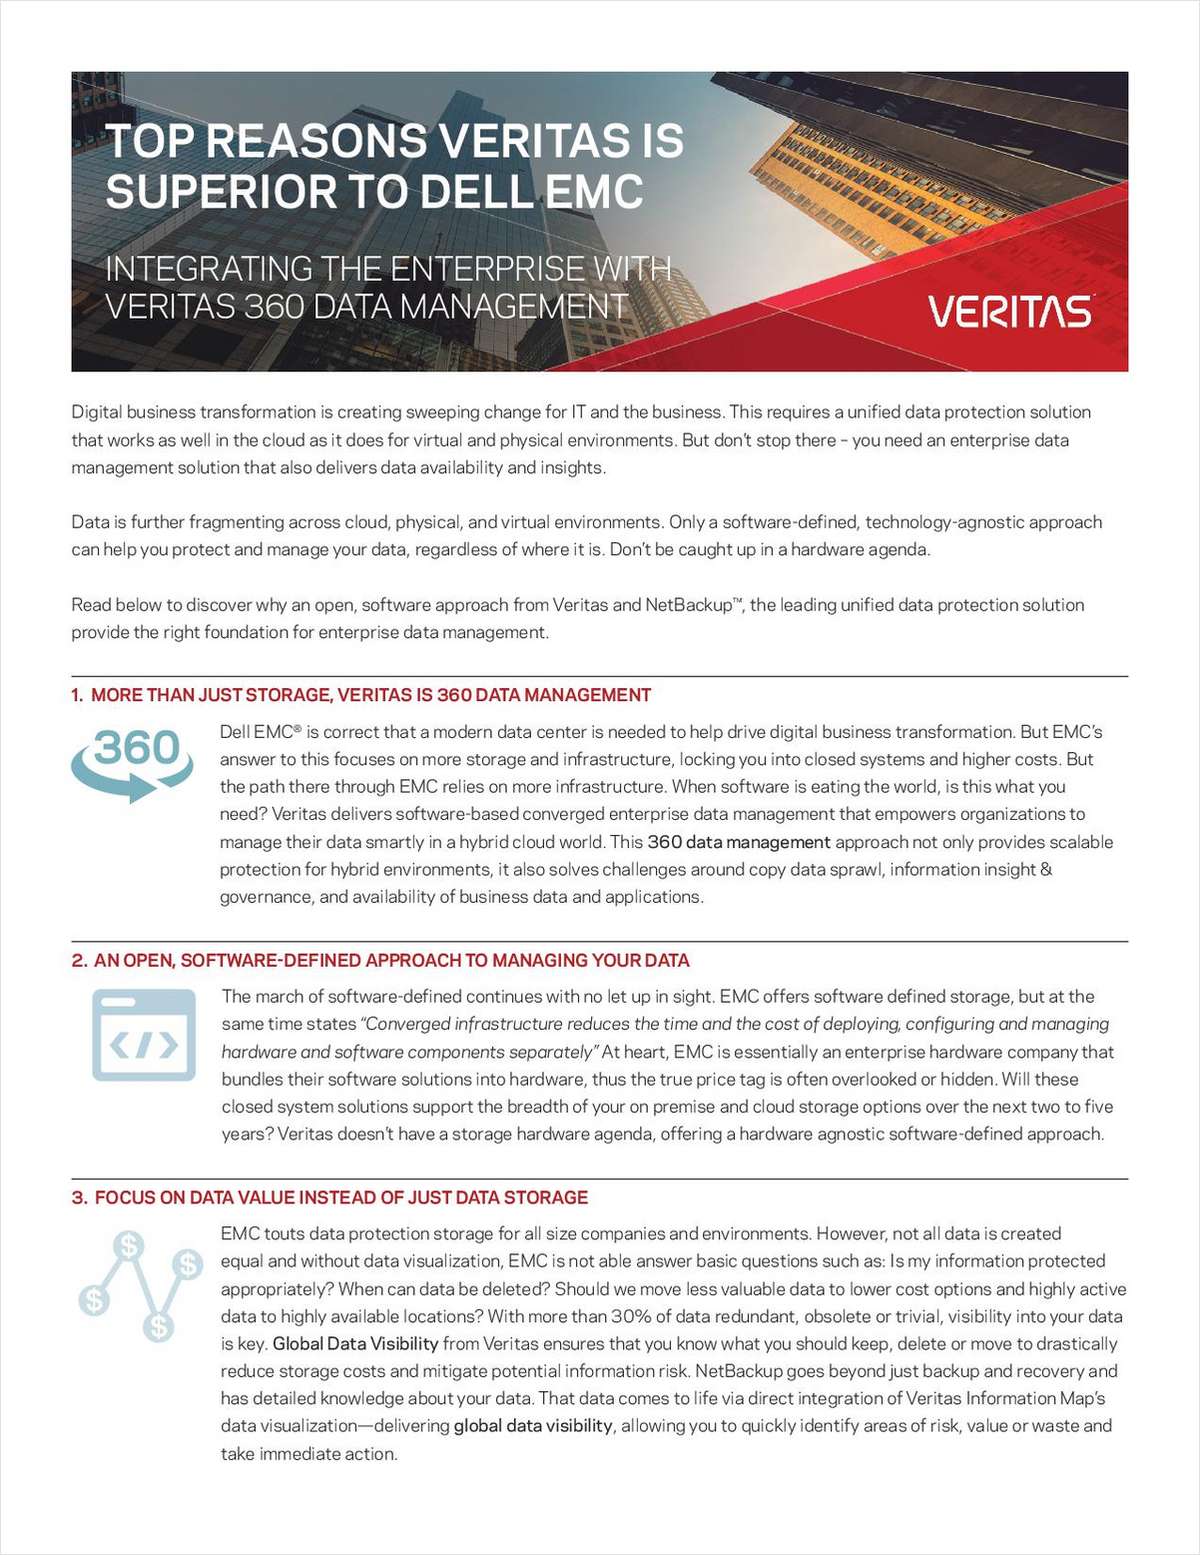 Top Reasons Veritas is Superior to Dell EMC